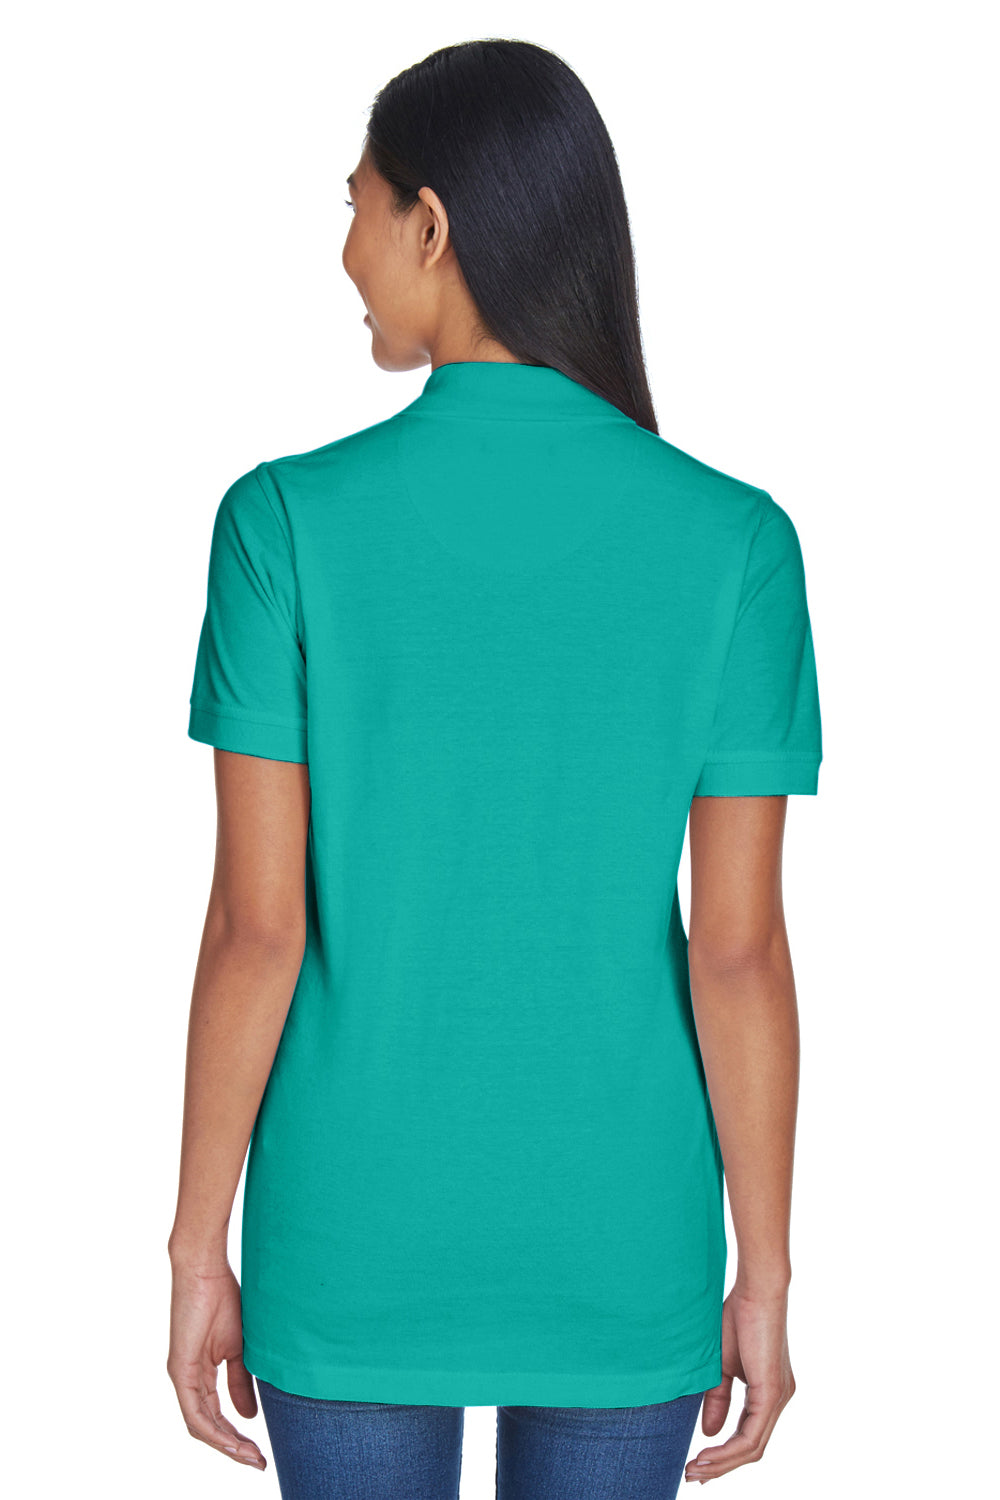 UltraClub 8530 Womens Classic Short Sleeve Polo Shirt Jade Green Back